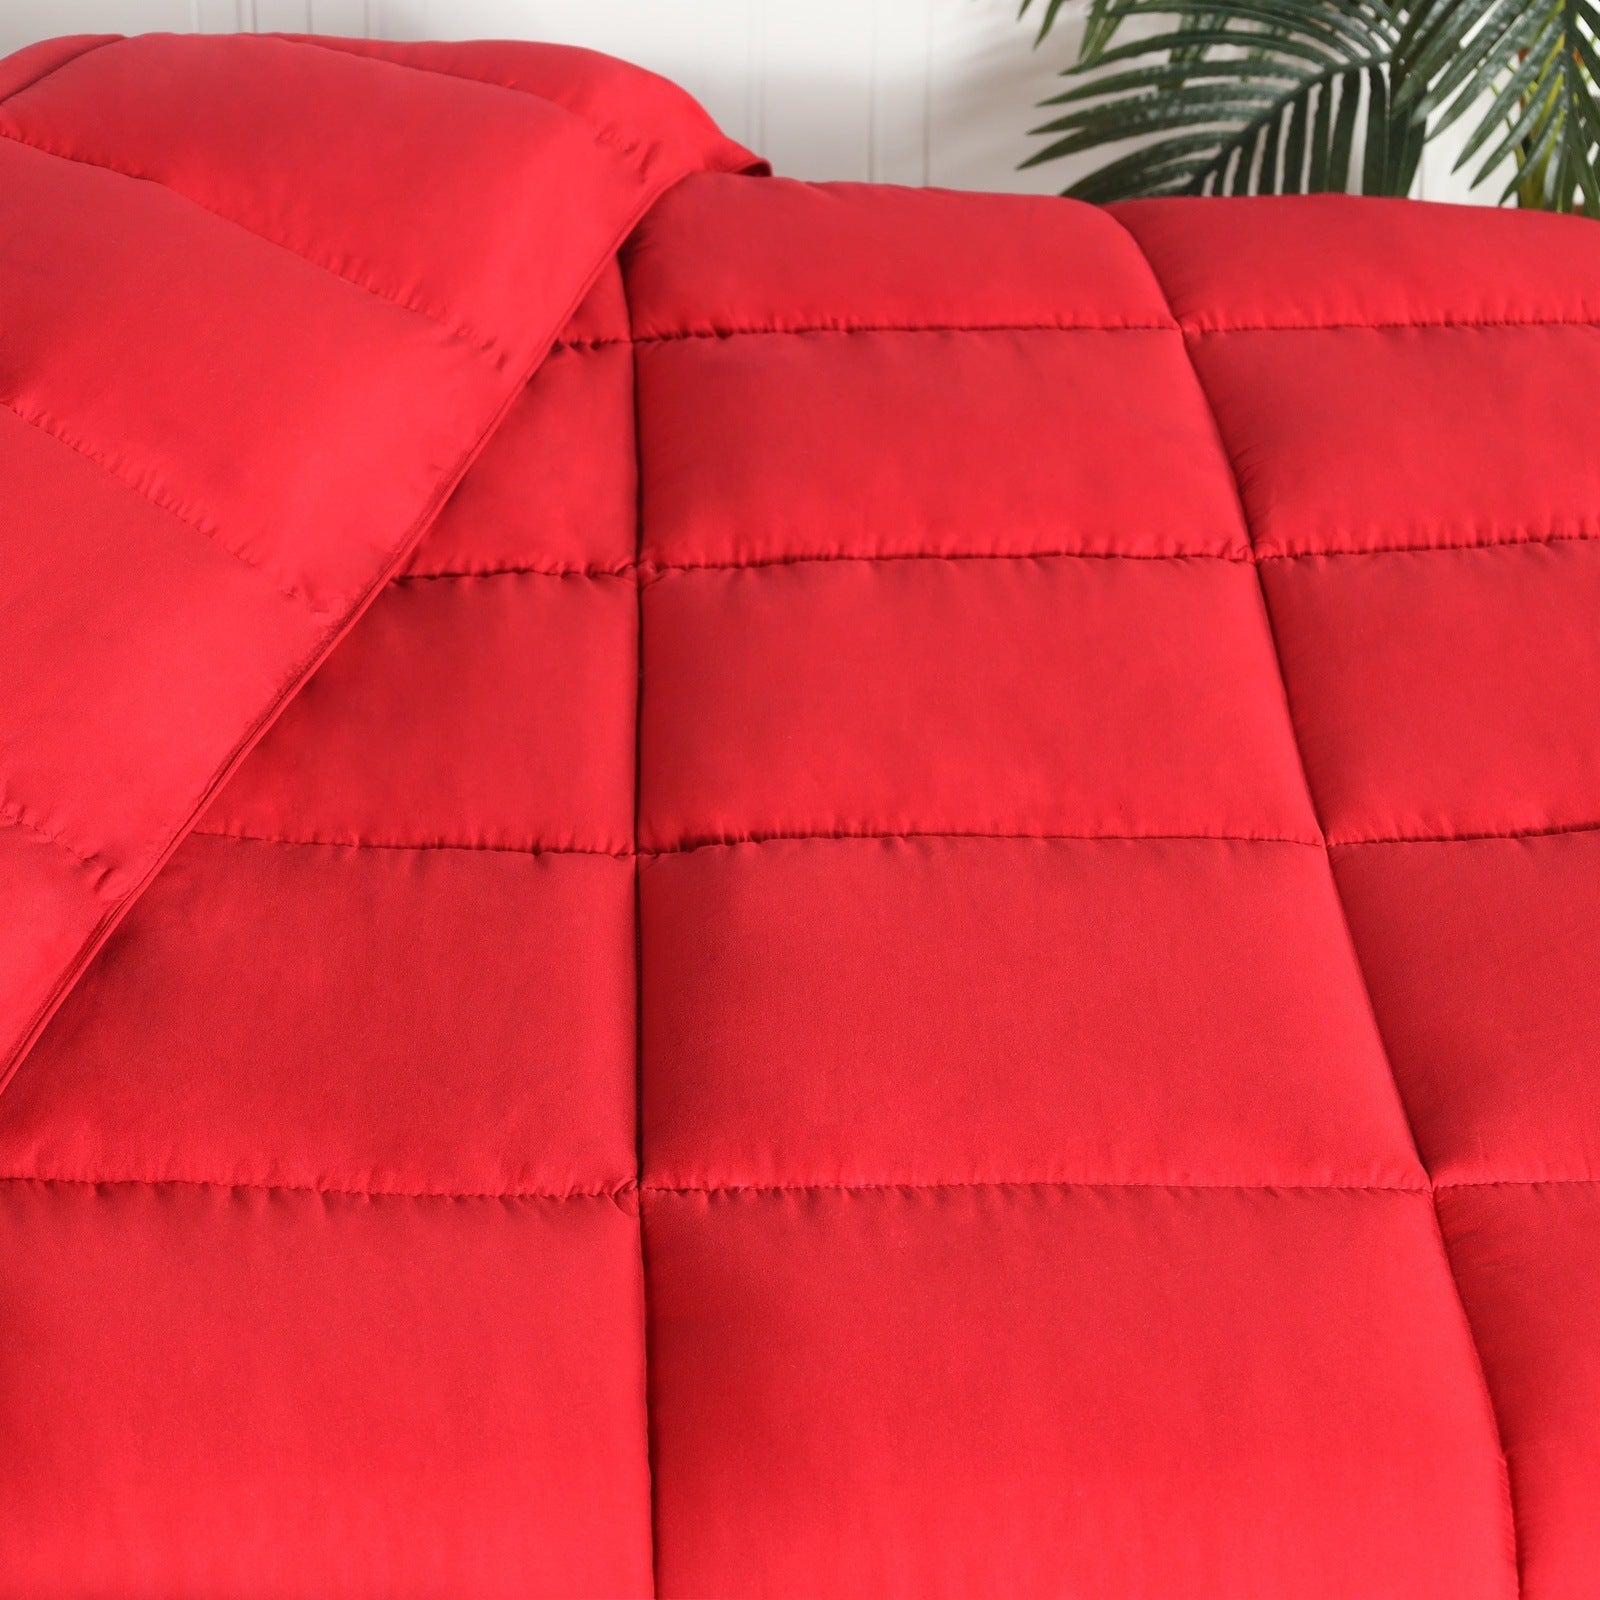  Superior Solid All Season Down Alternative Microfiber Comforter - Red